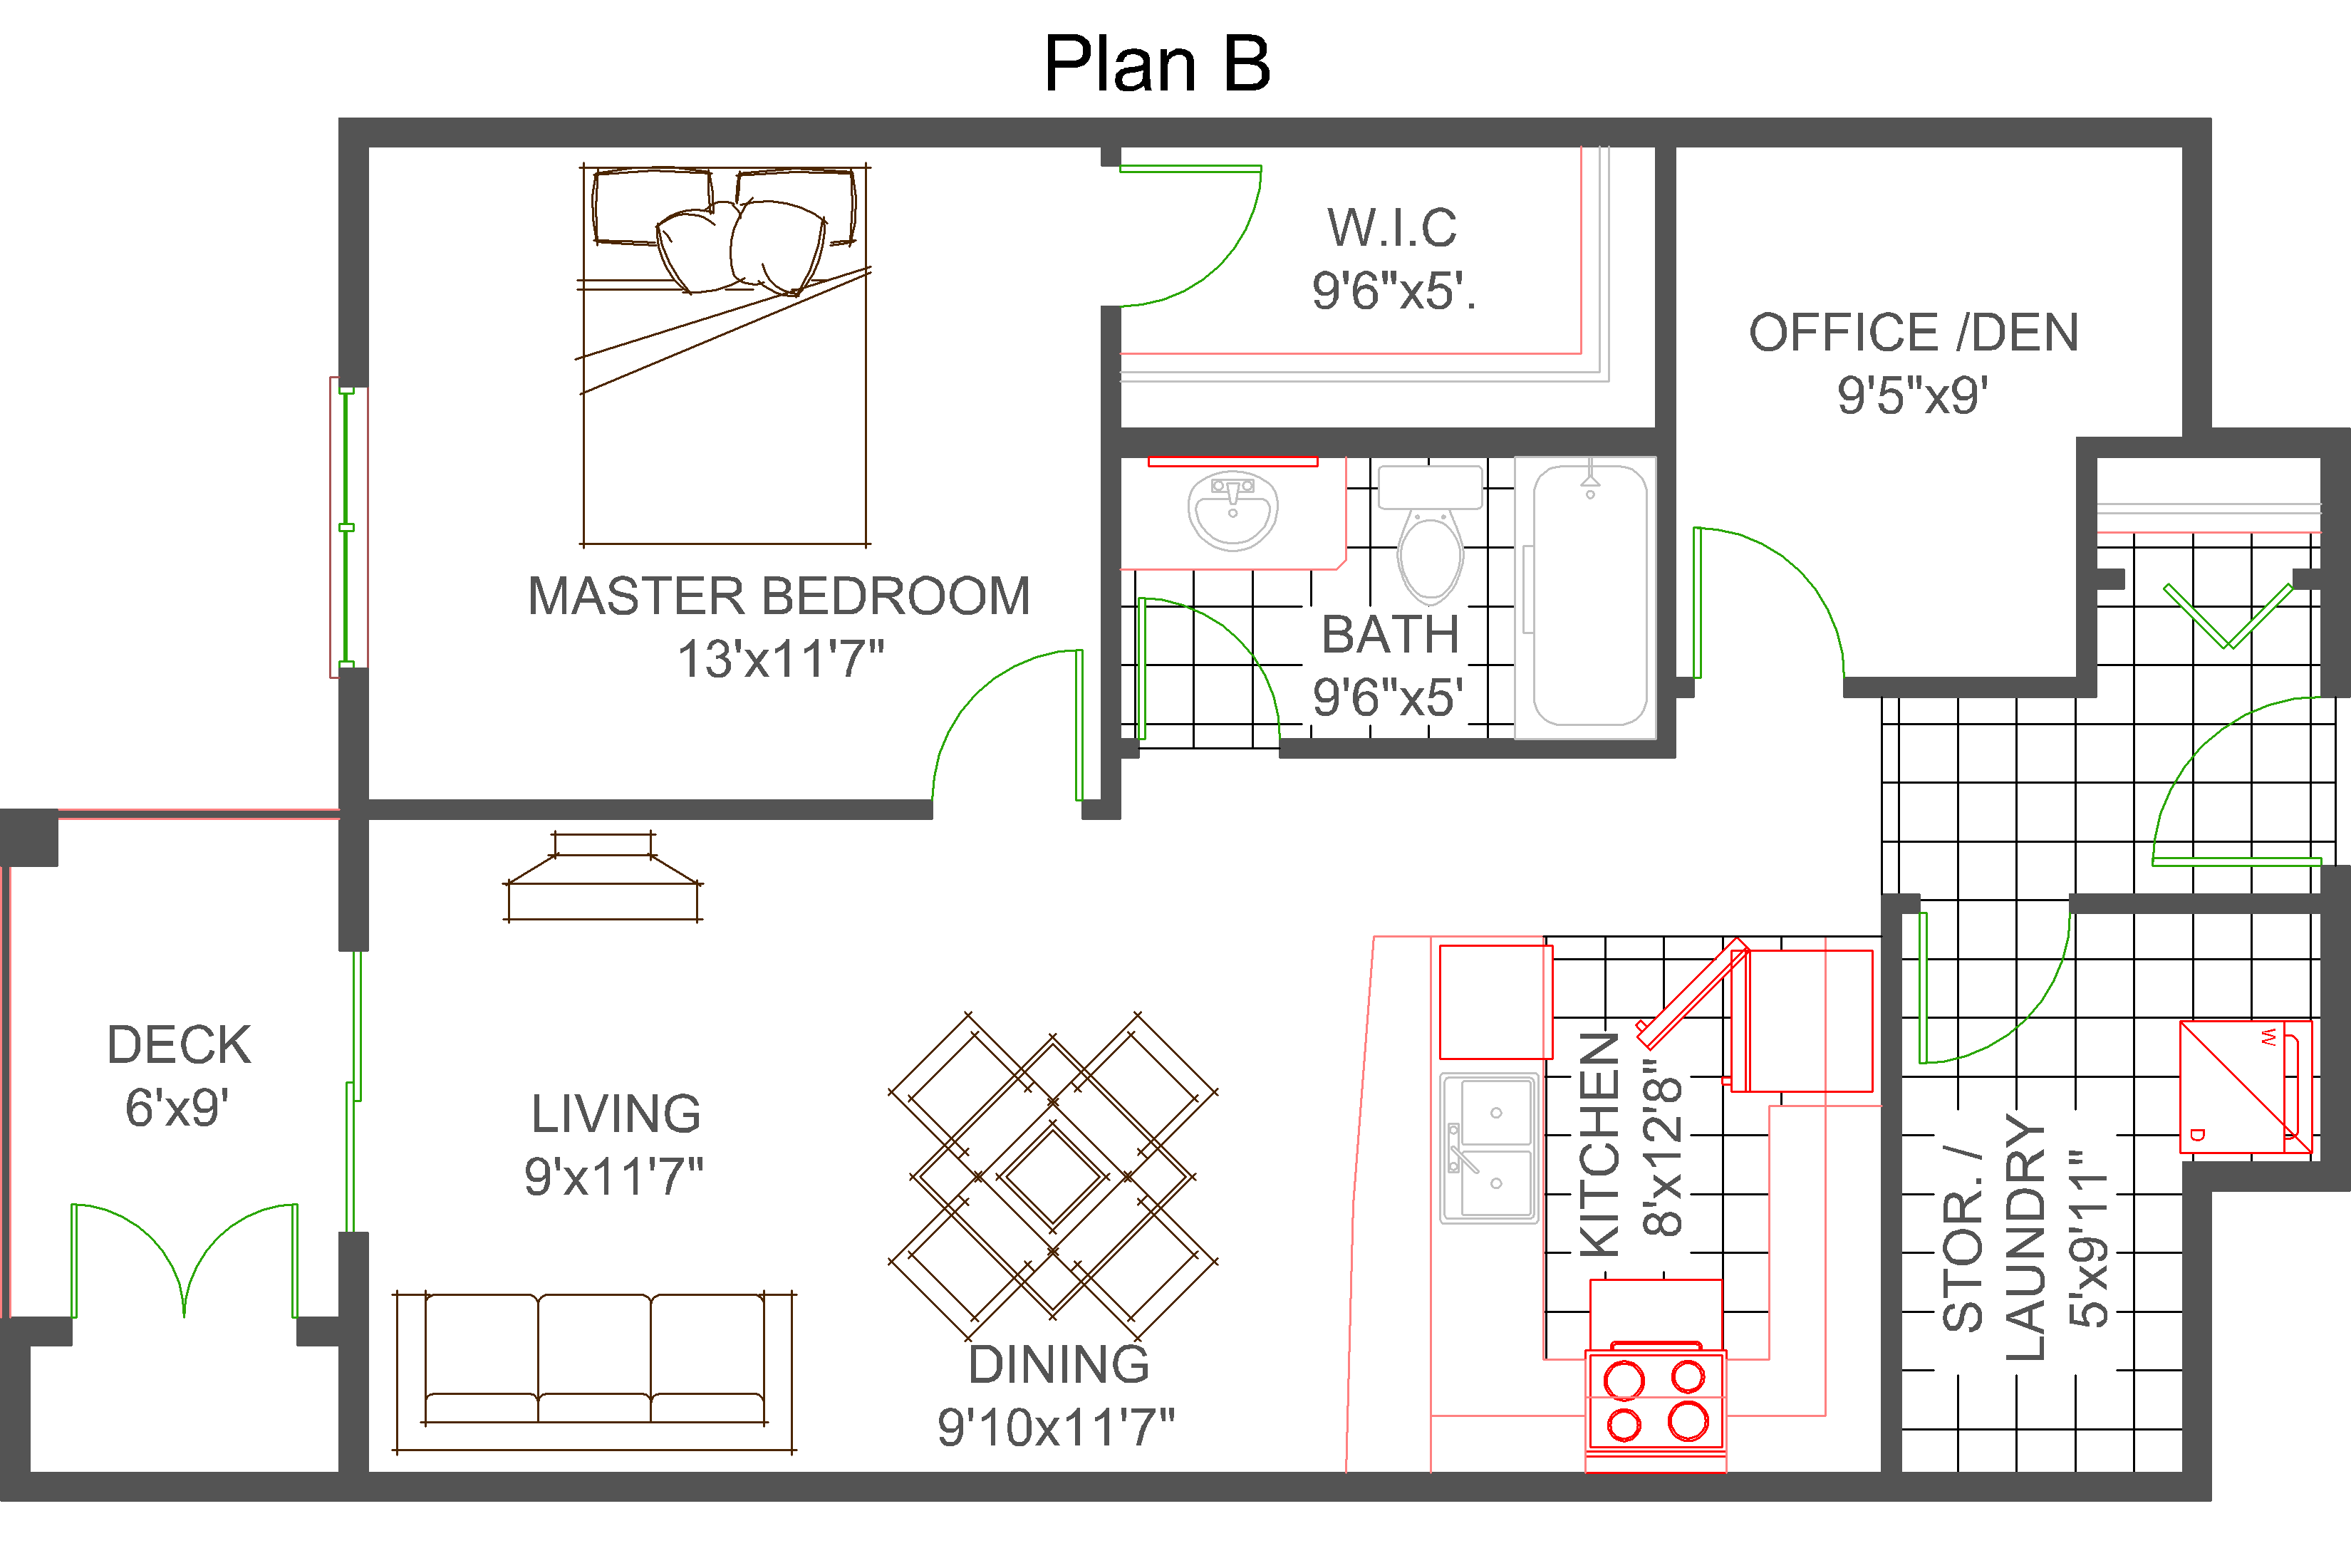 Dallas Town Centre - Plan B